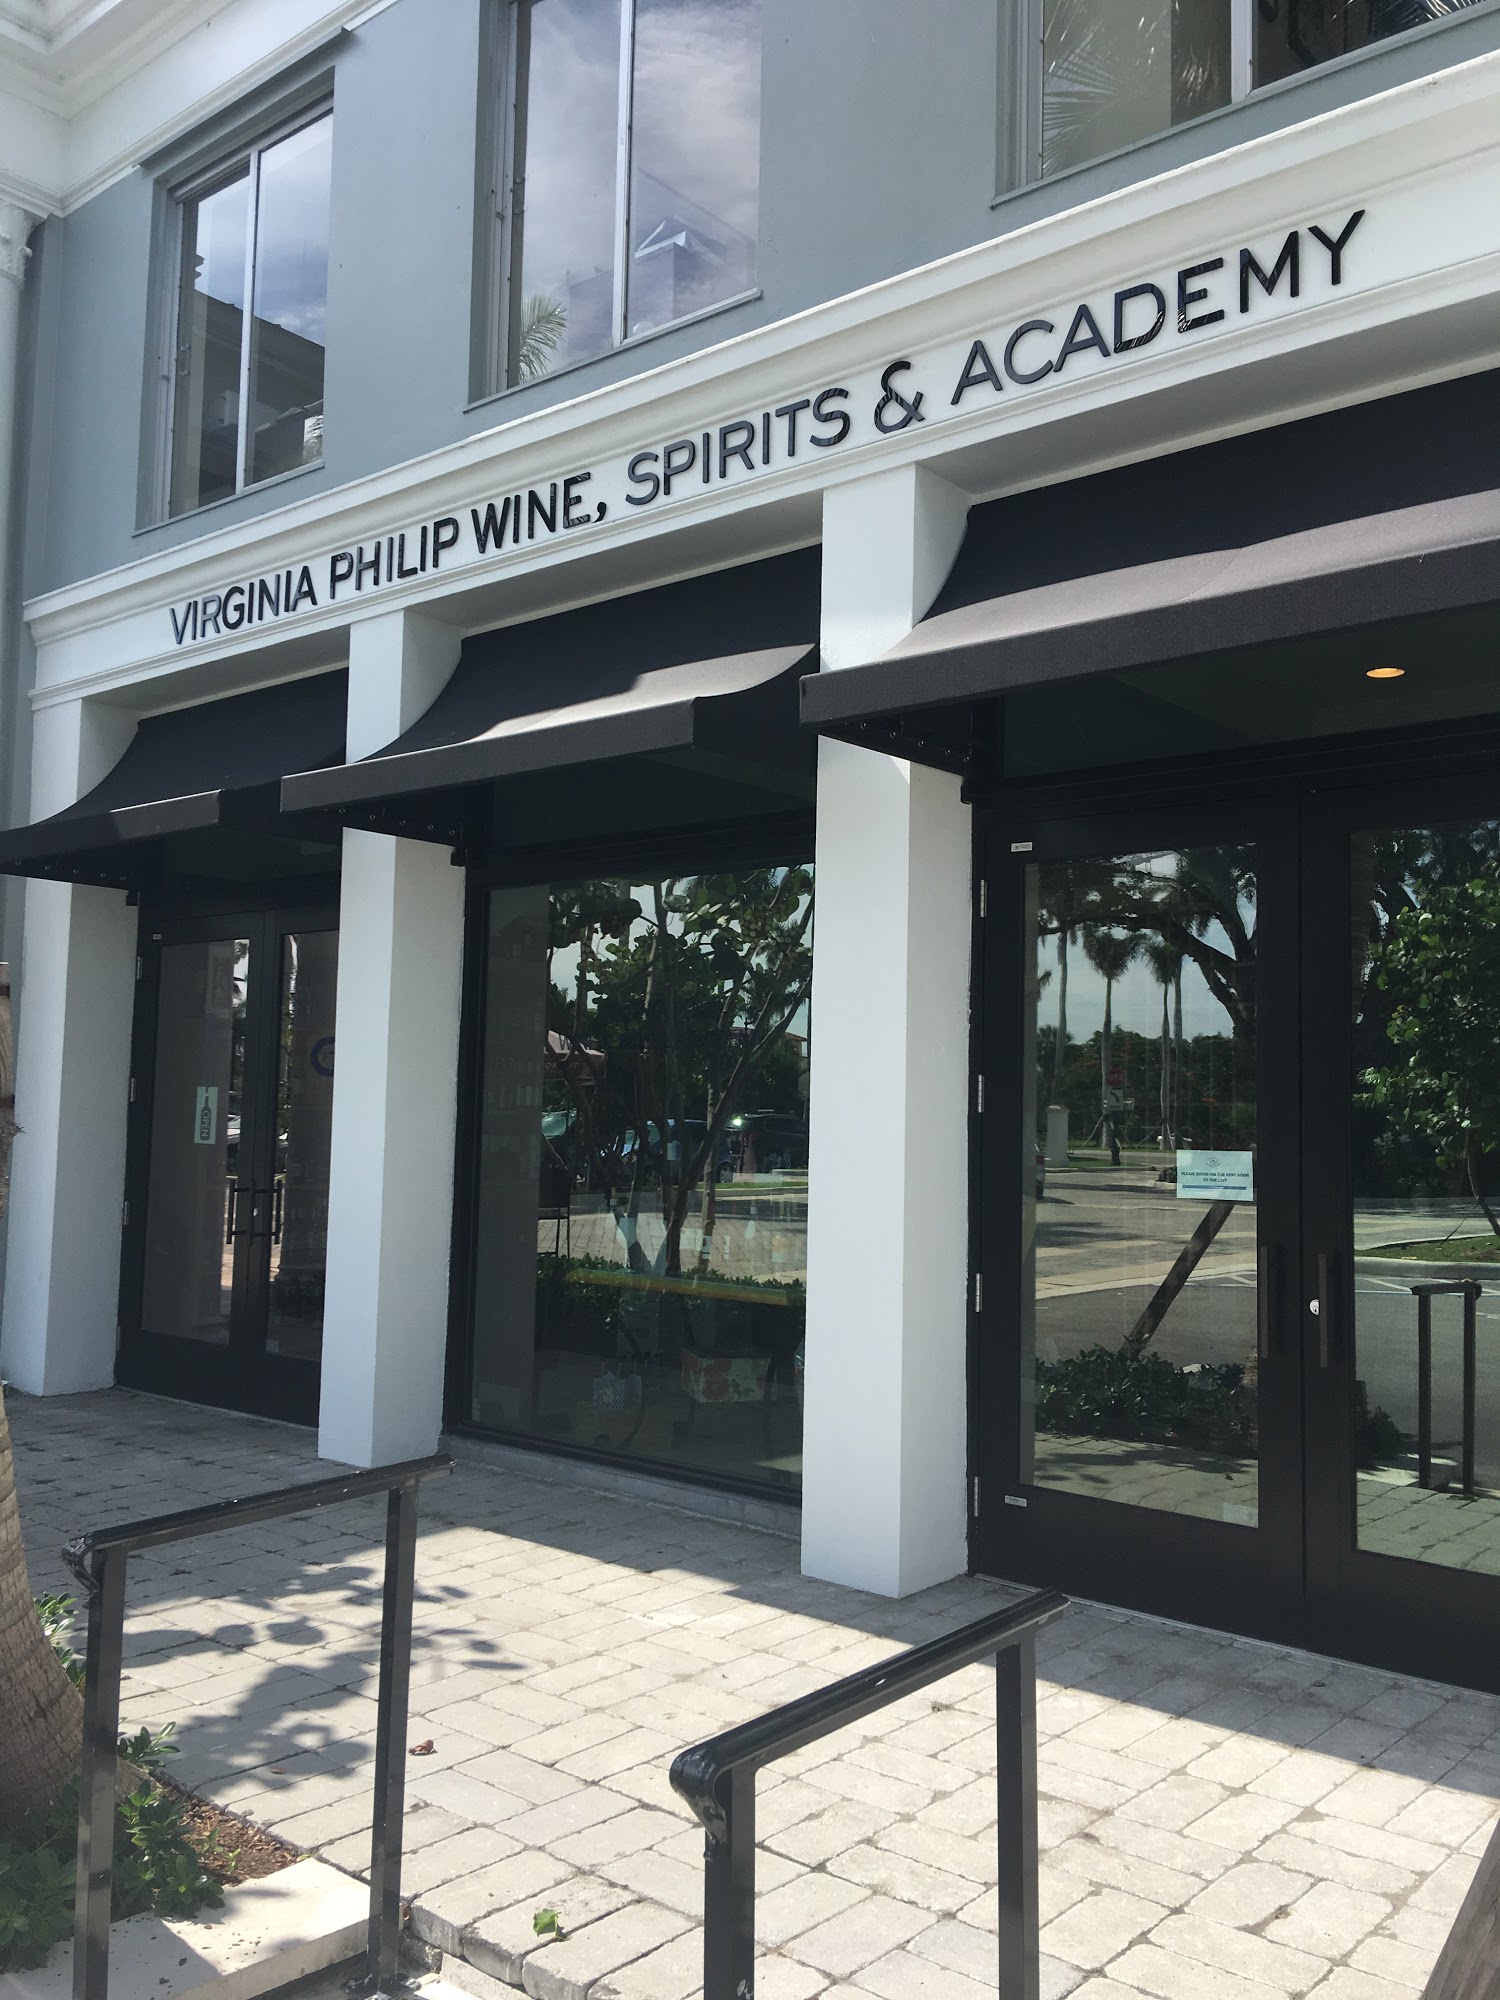 Virginia Philip Wine Spirits & Academy